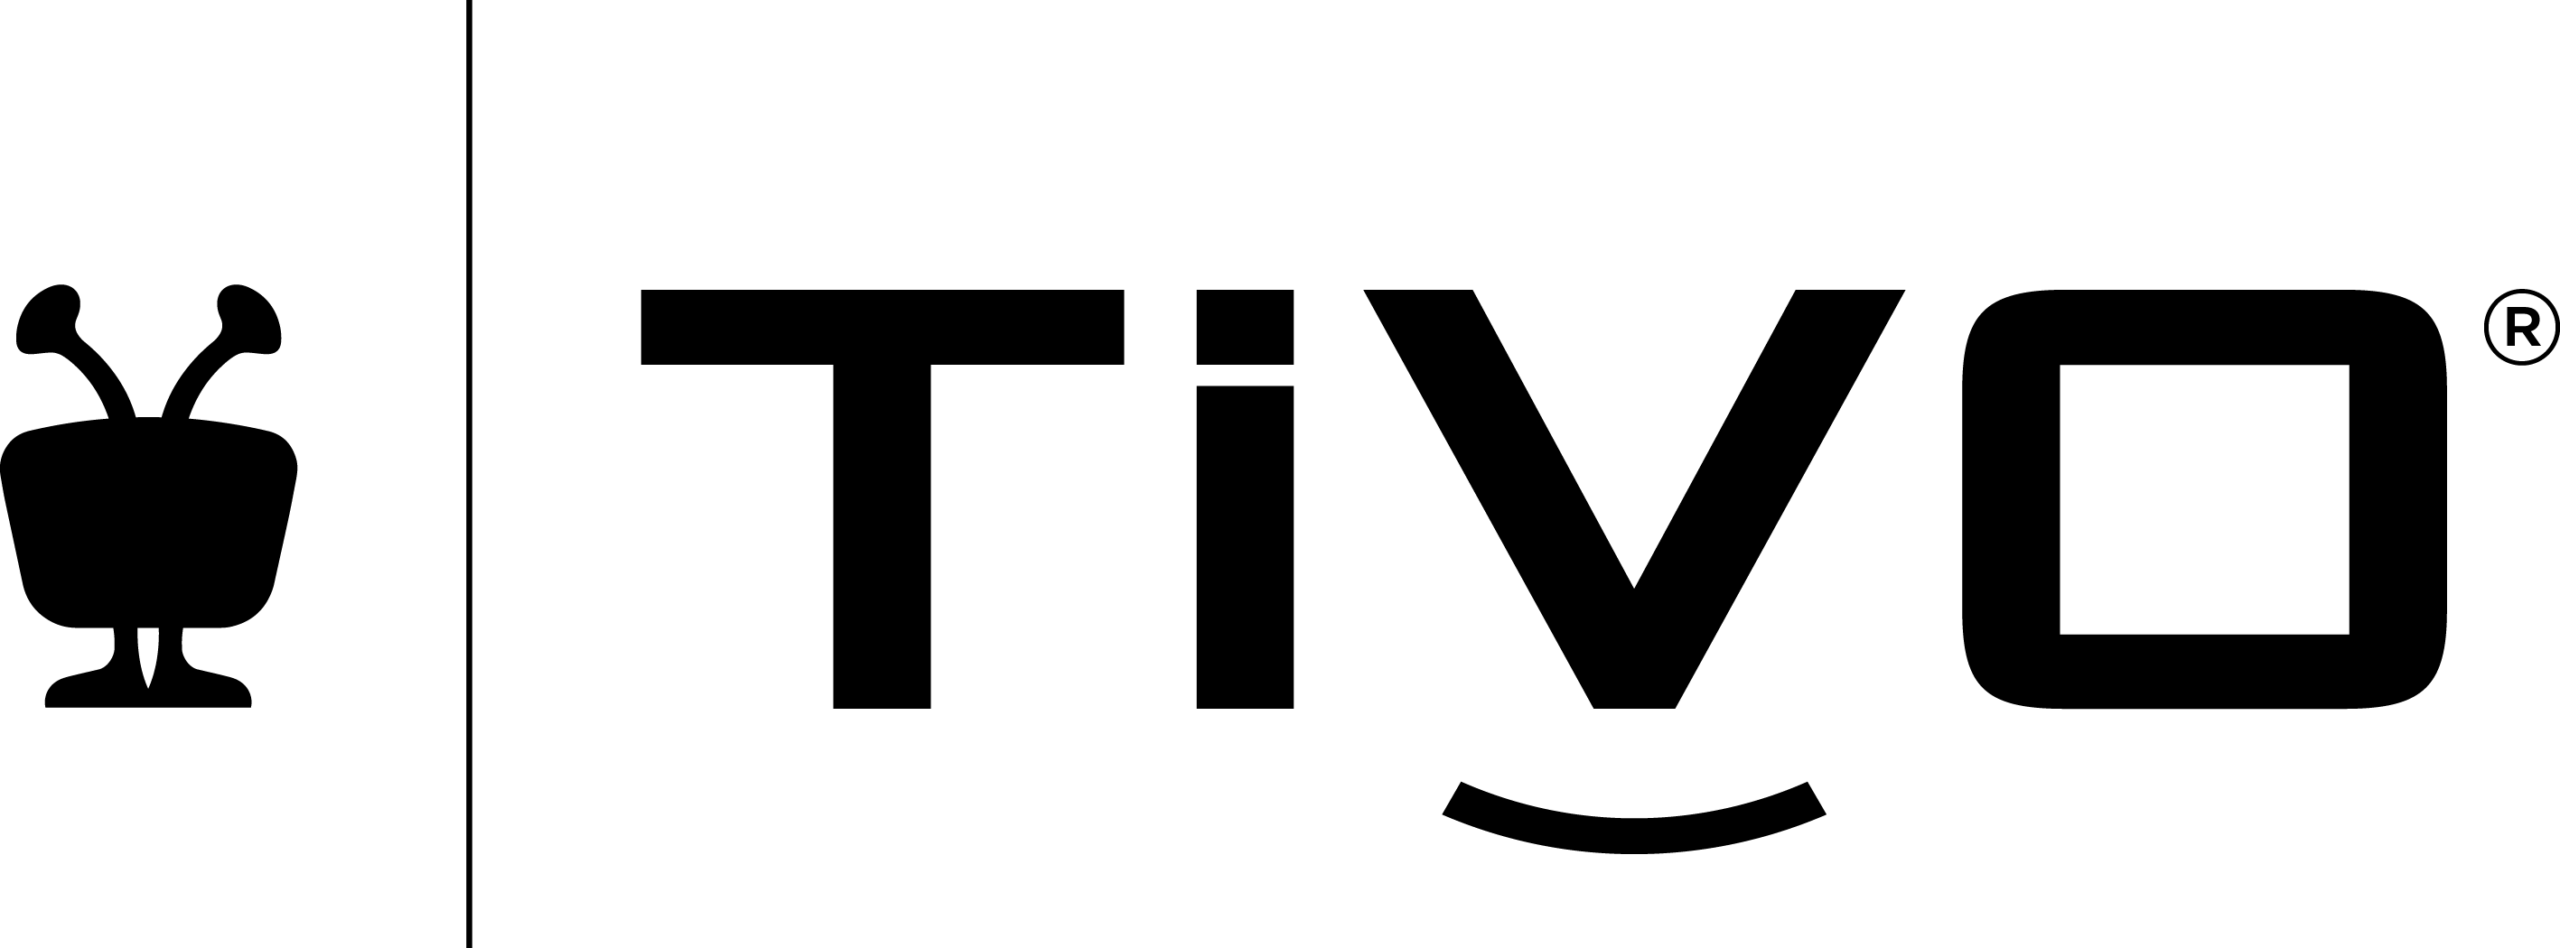 TiVo-logo